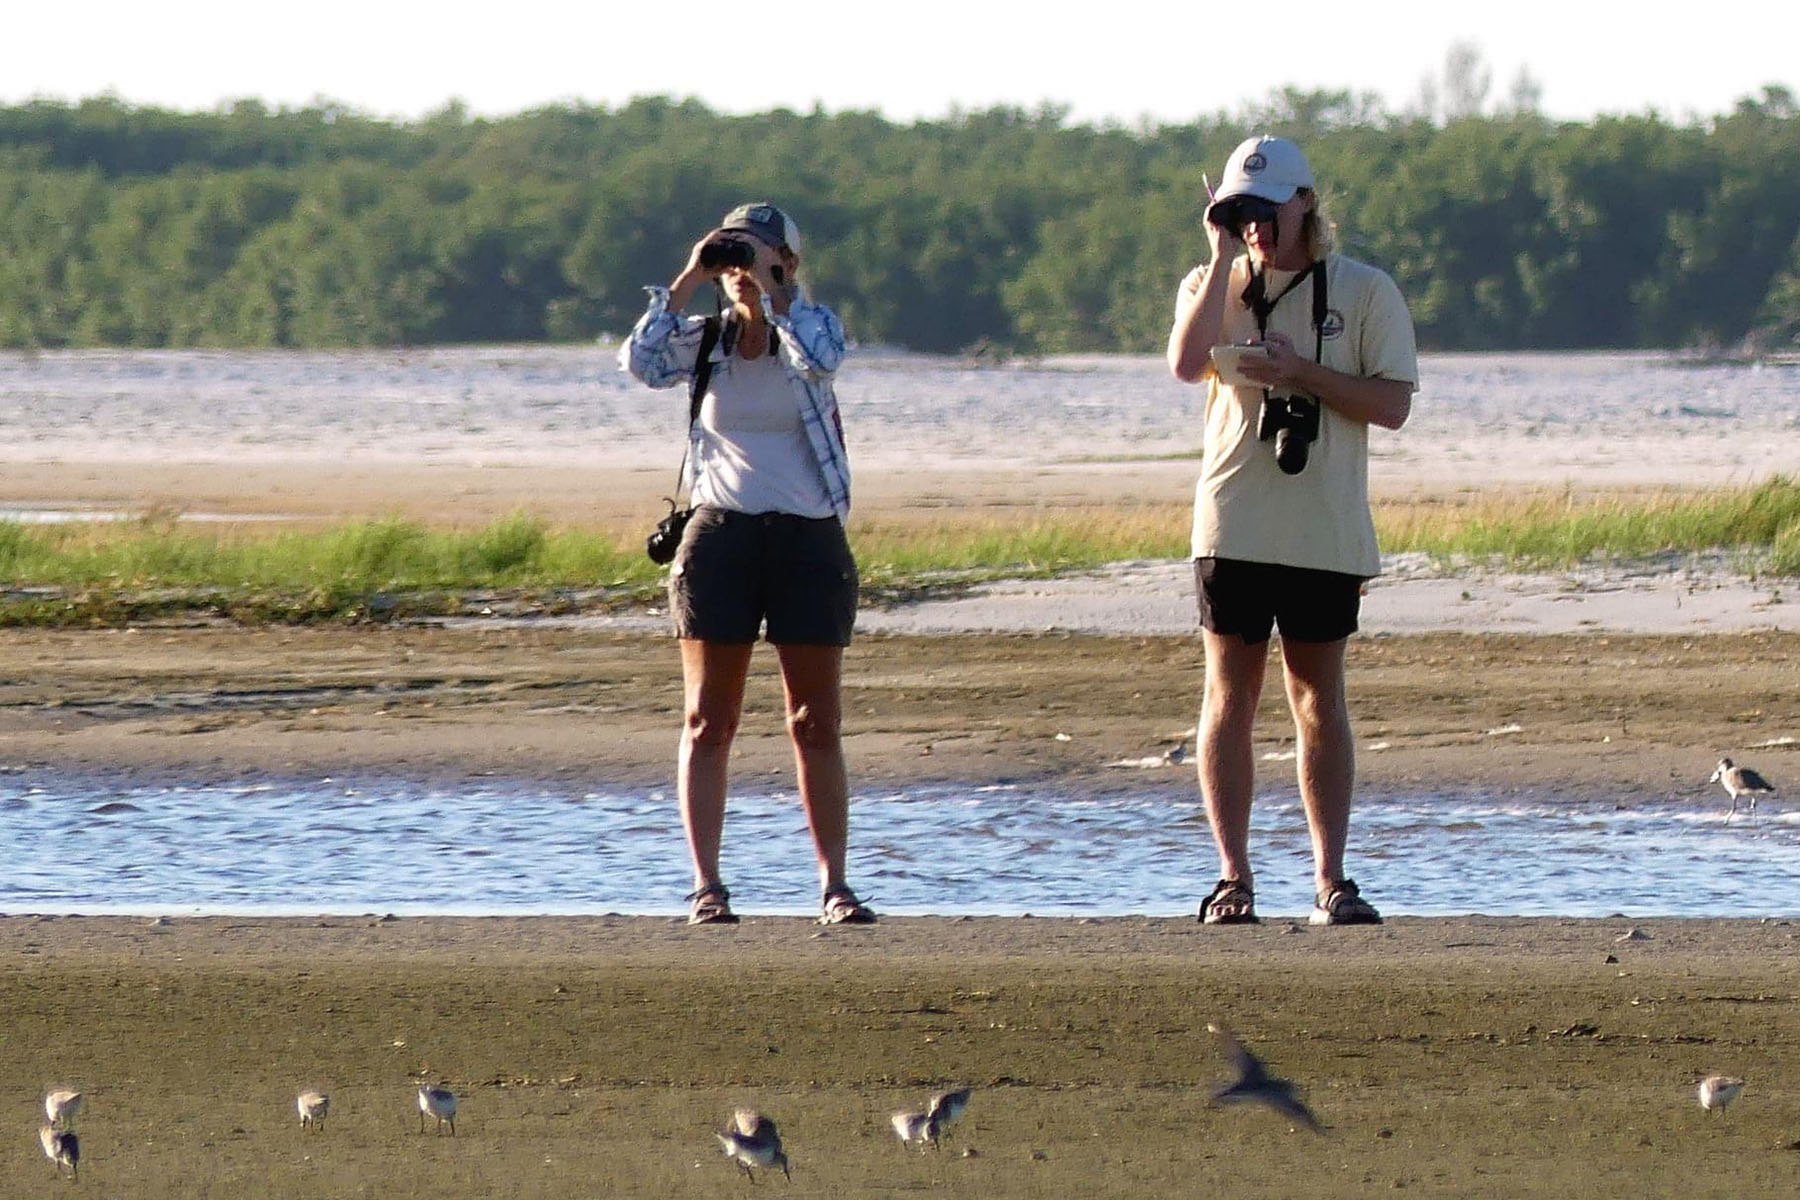 Professor and student look through binoculars at shore birds in park